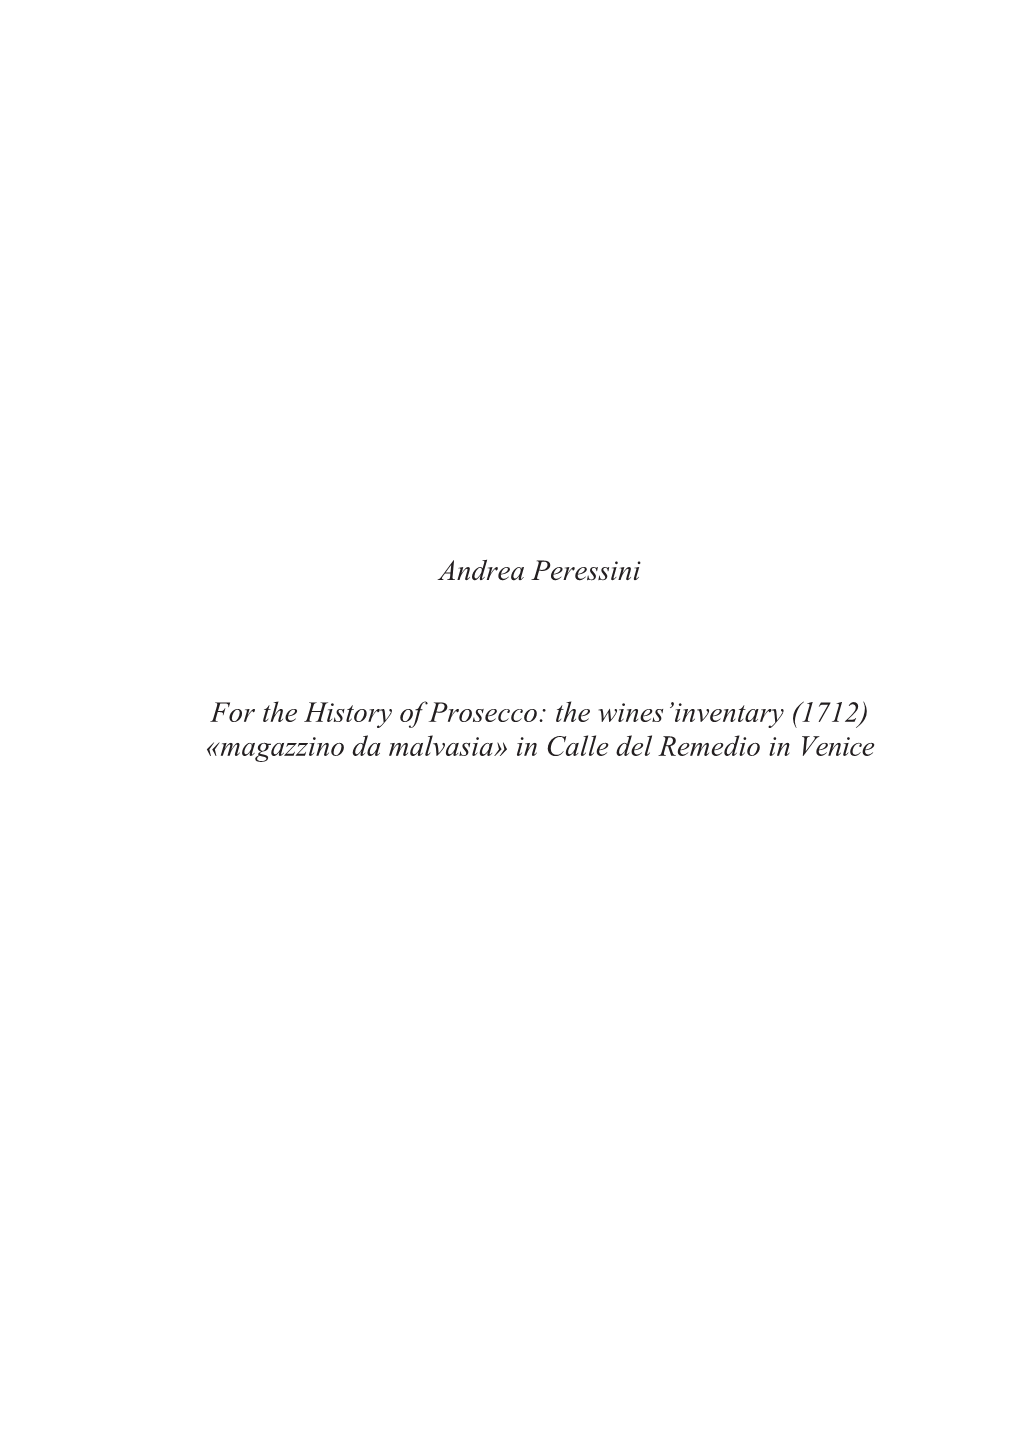 Andrea Peressini for the History of Prosecco: the Wines